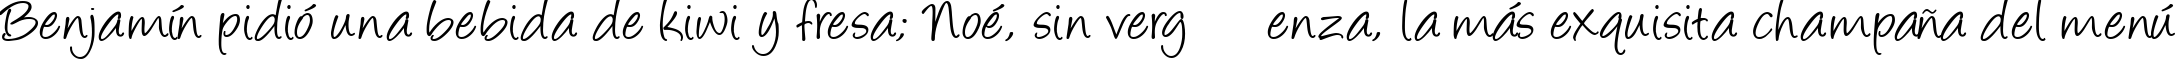 Пример написания шрифтом Angelina текста на испанском